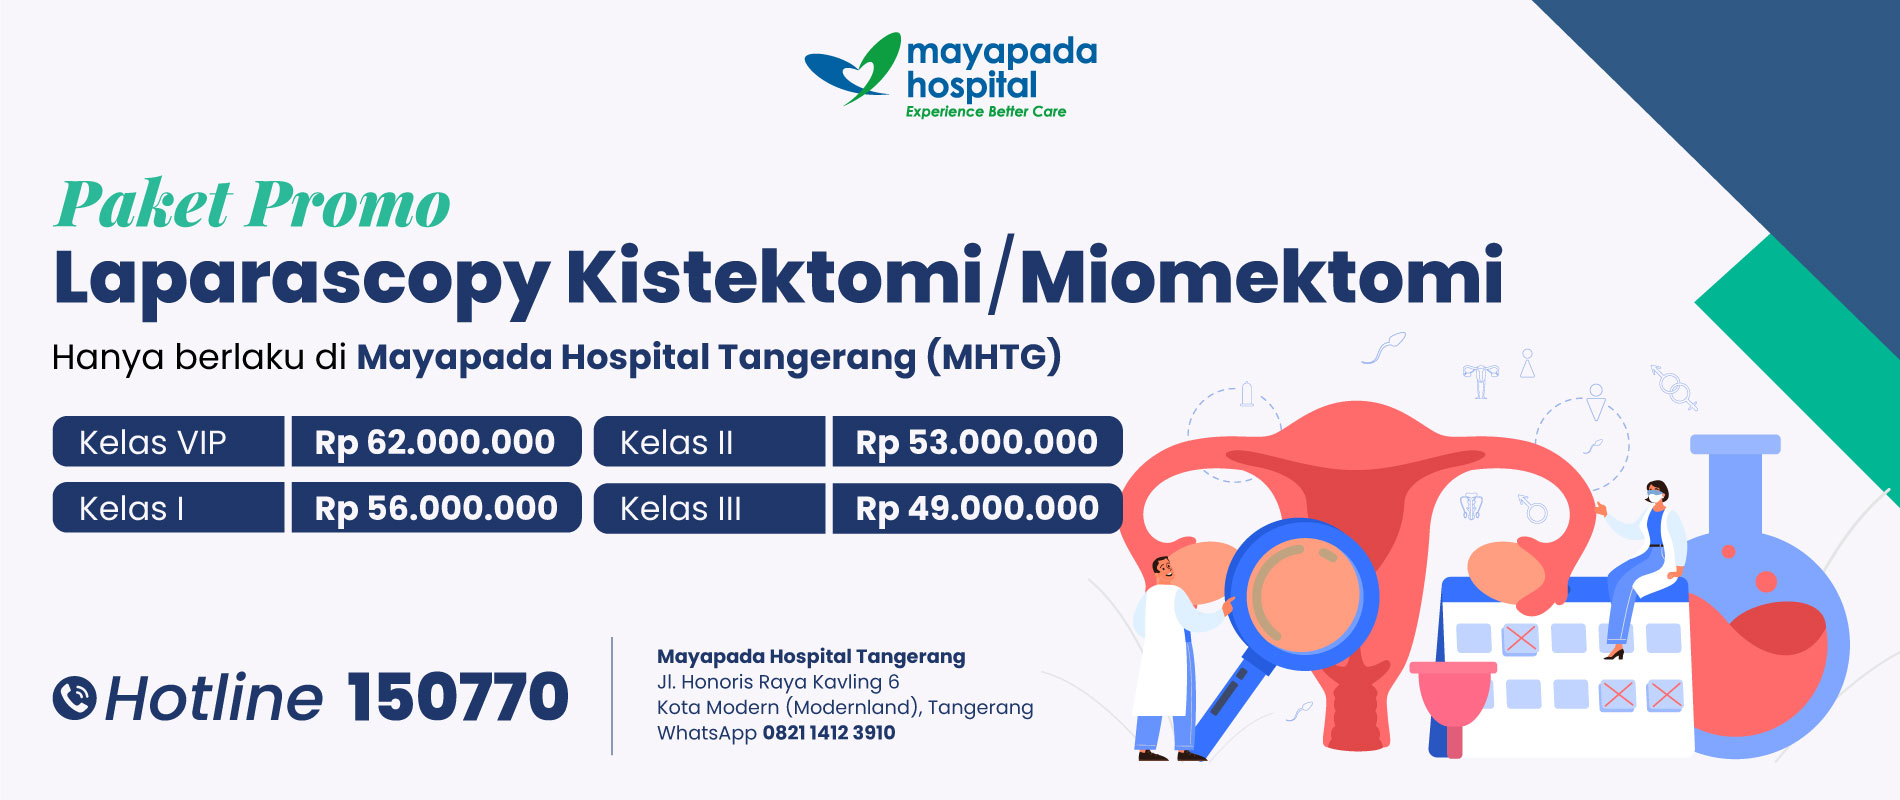 Paket Promo Laparascopy Kistektomi/Miomektomi Mayapada Hospital Tangerang IMG